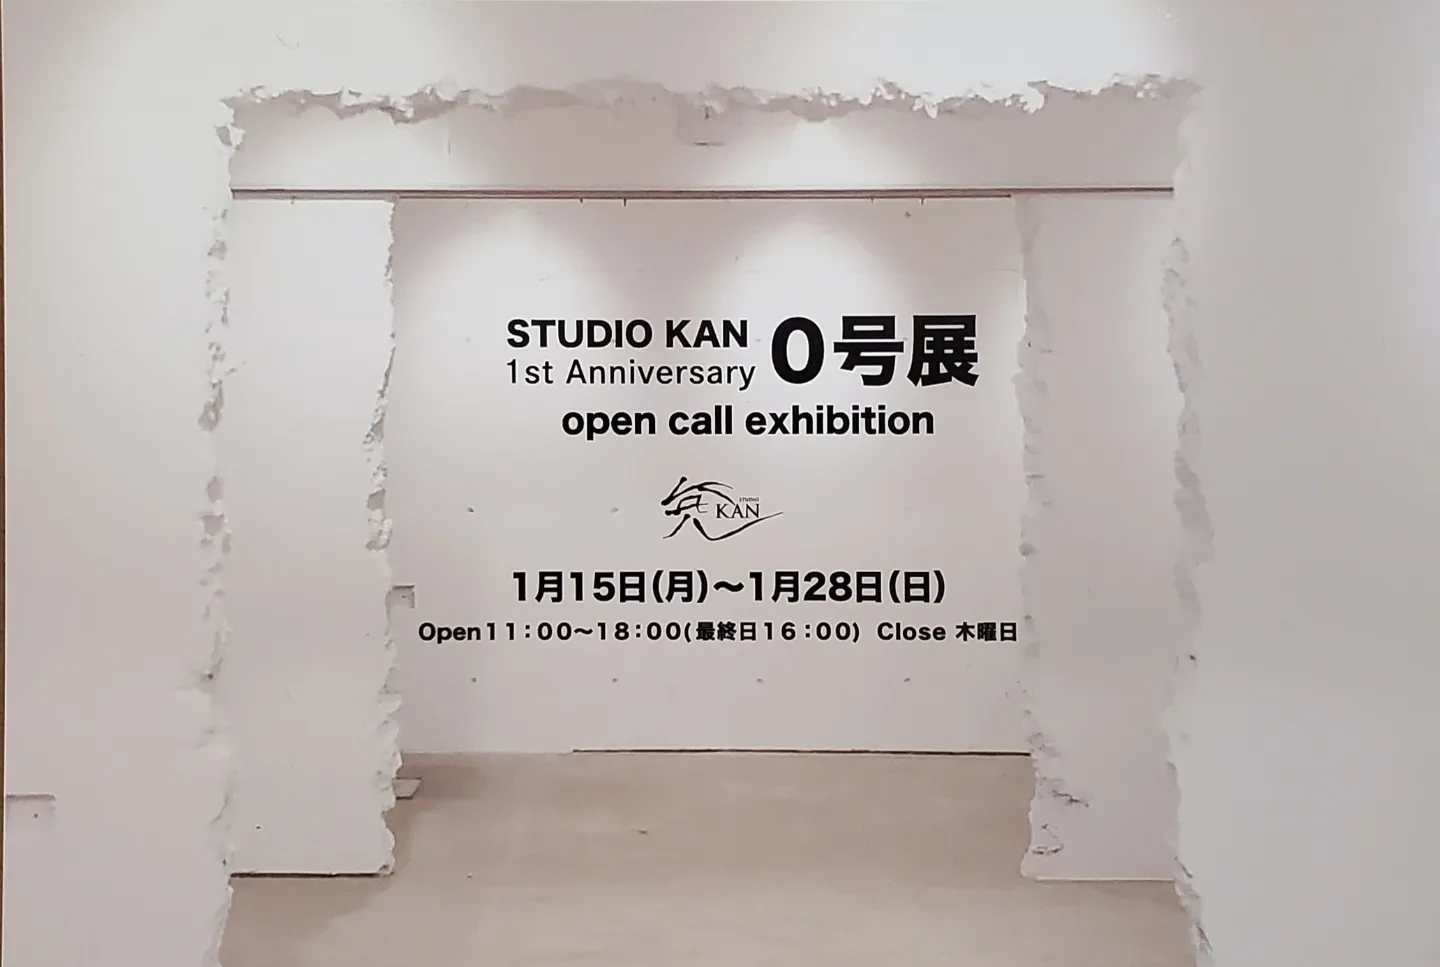 STUDIO KAN 1st Anniversary 0号展